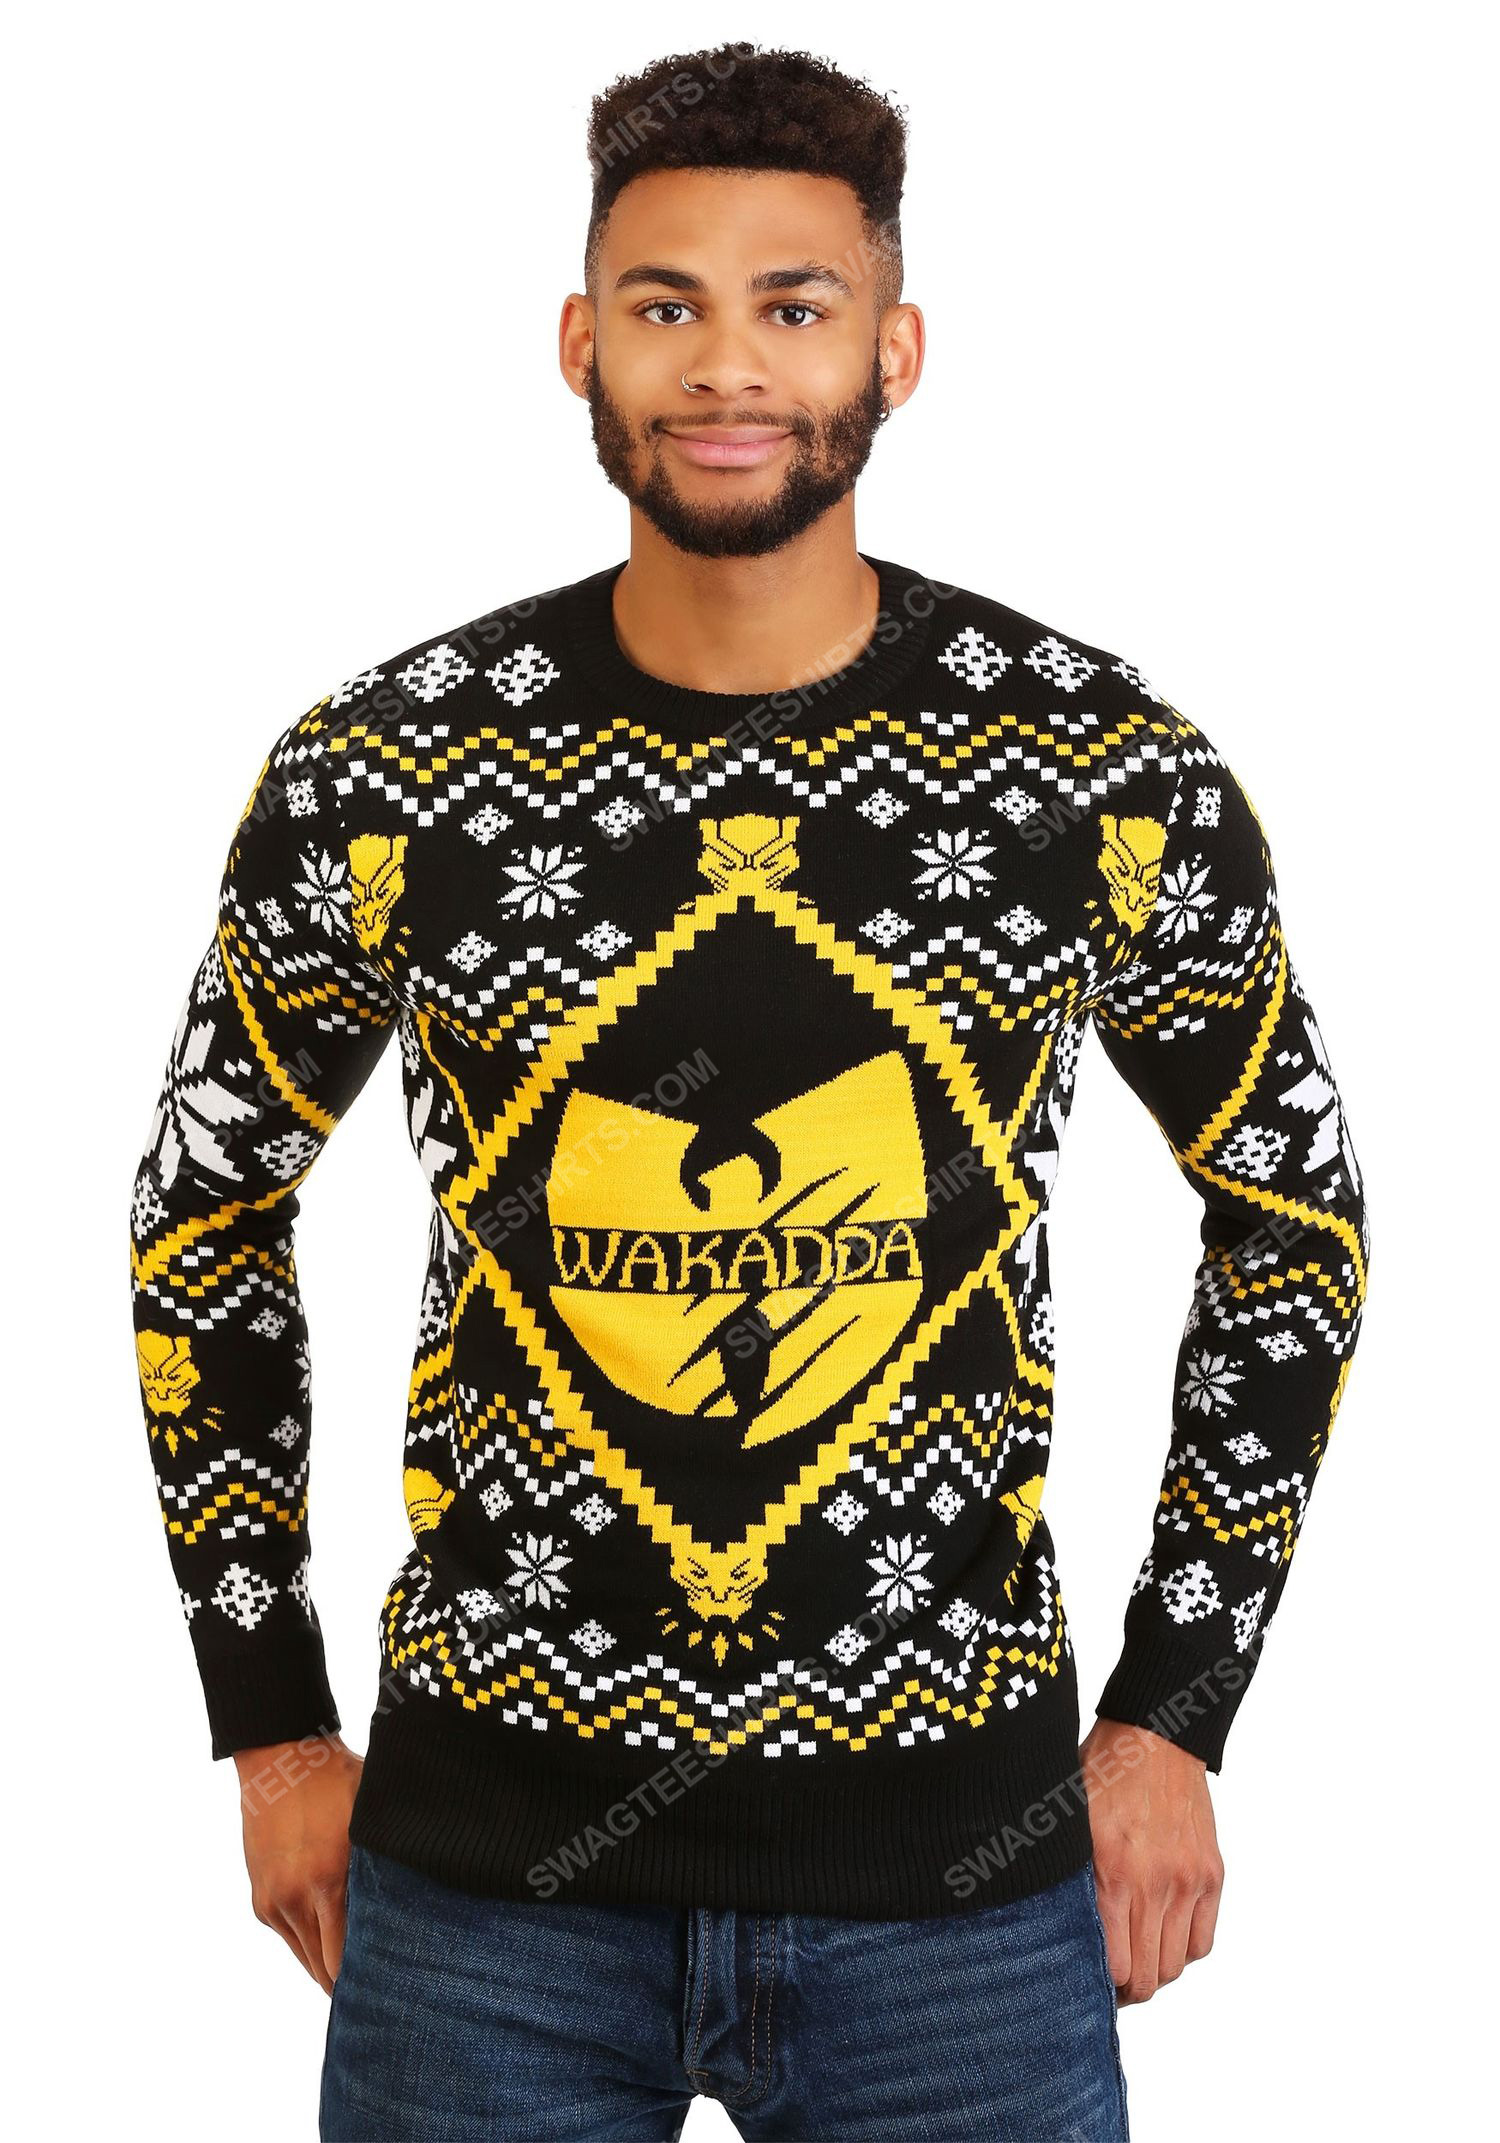 Wu tang clan black panther wakanda ugly christmas sweater 1 - Copy (2)